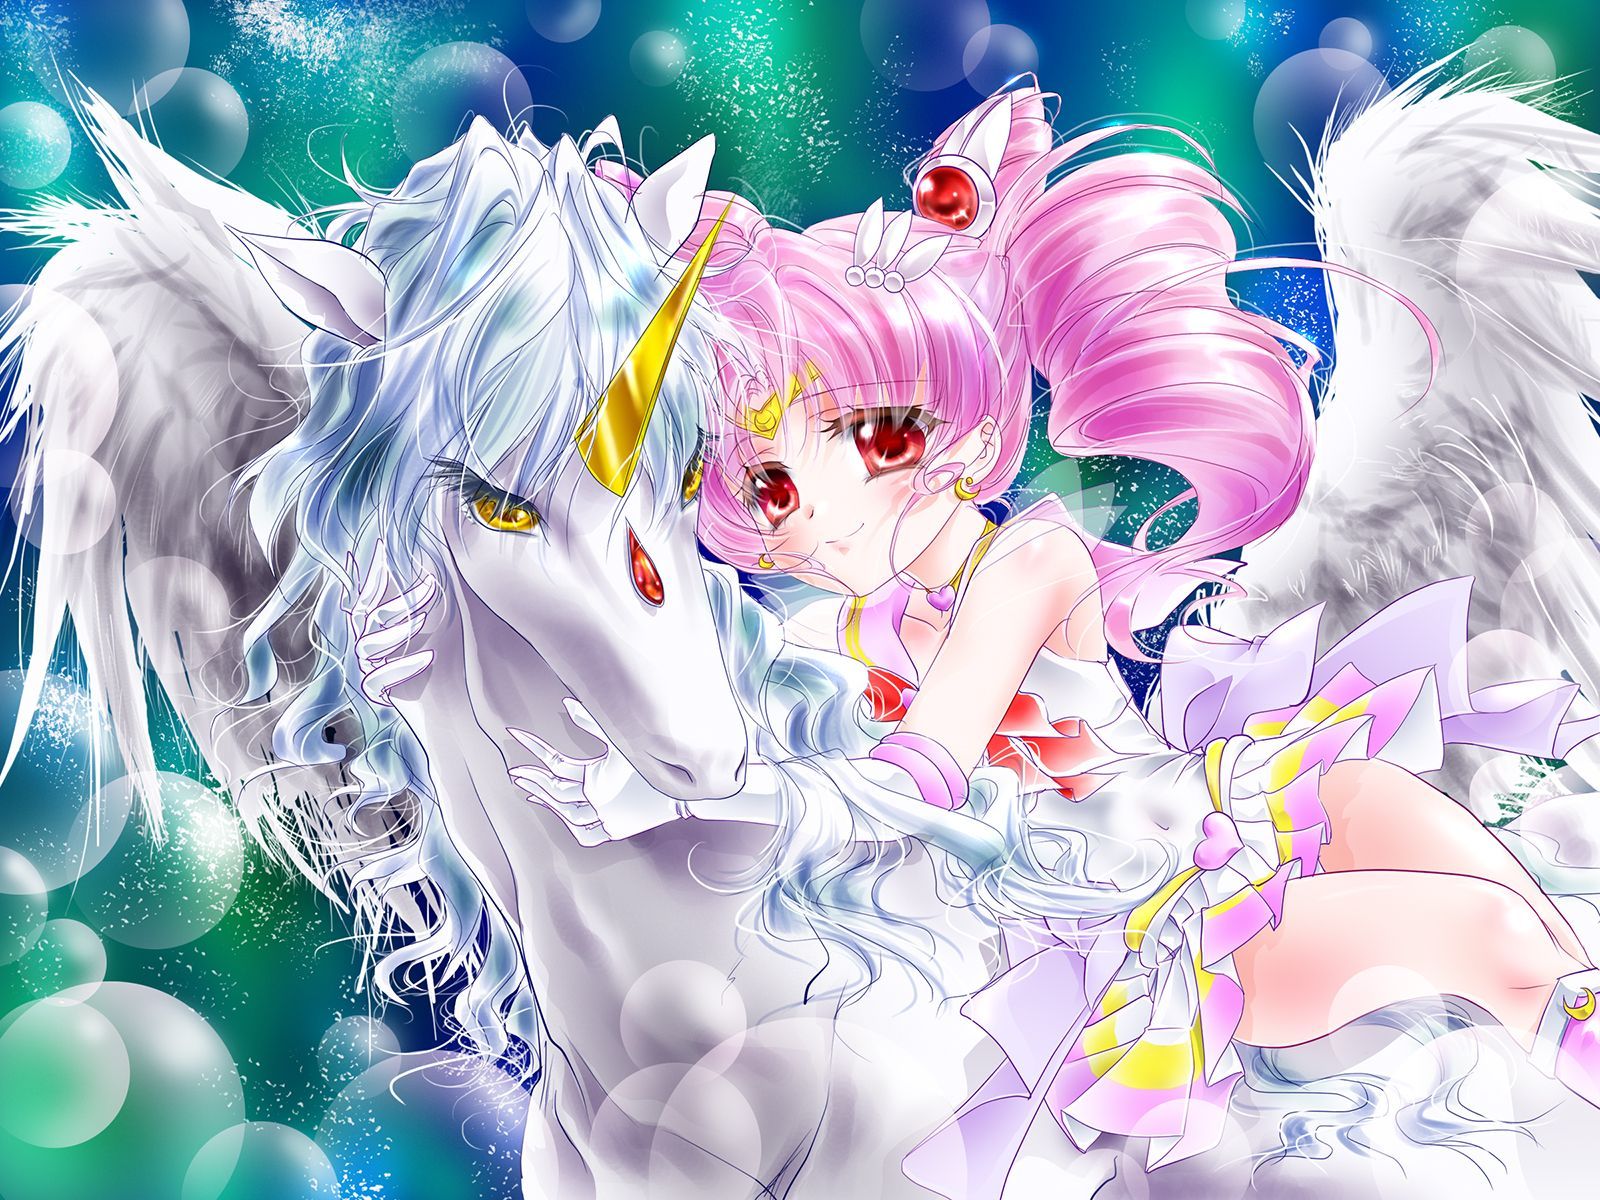 2014 01 11 627903.jpeg 600×200 Pixels. Sailor Moon Wallpaper, Sailor Chibi Moon, Sailor Moon Manga